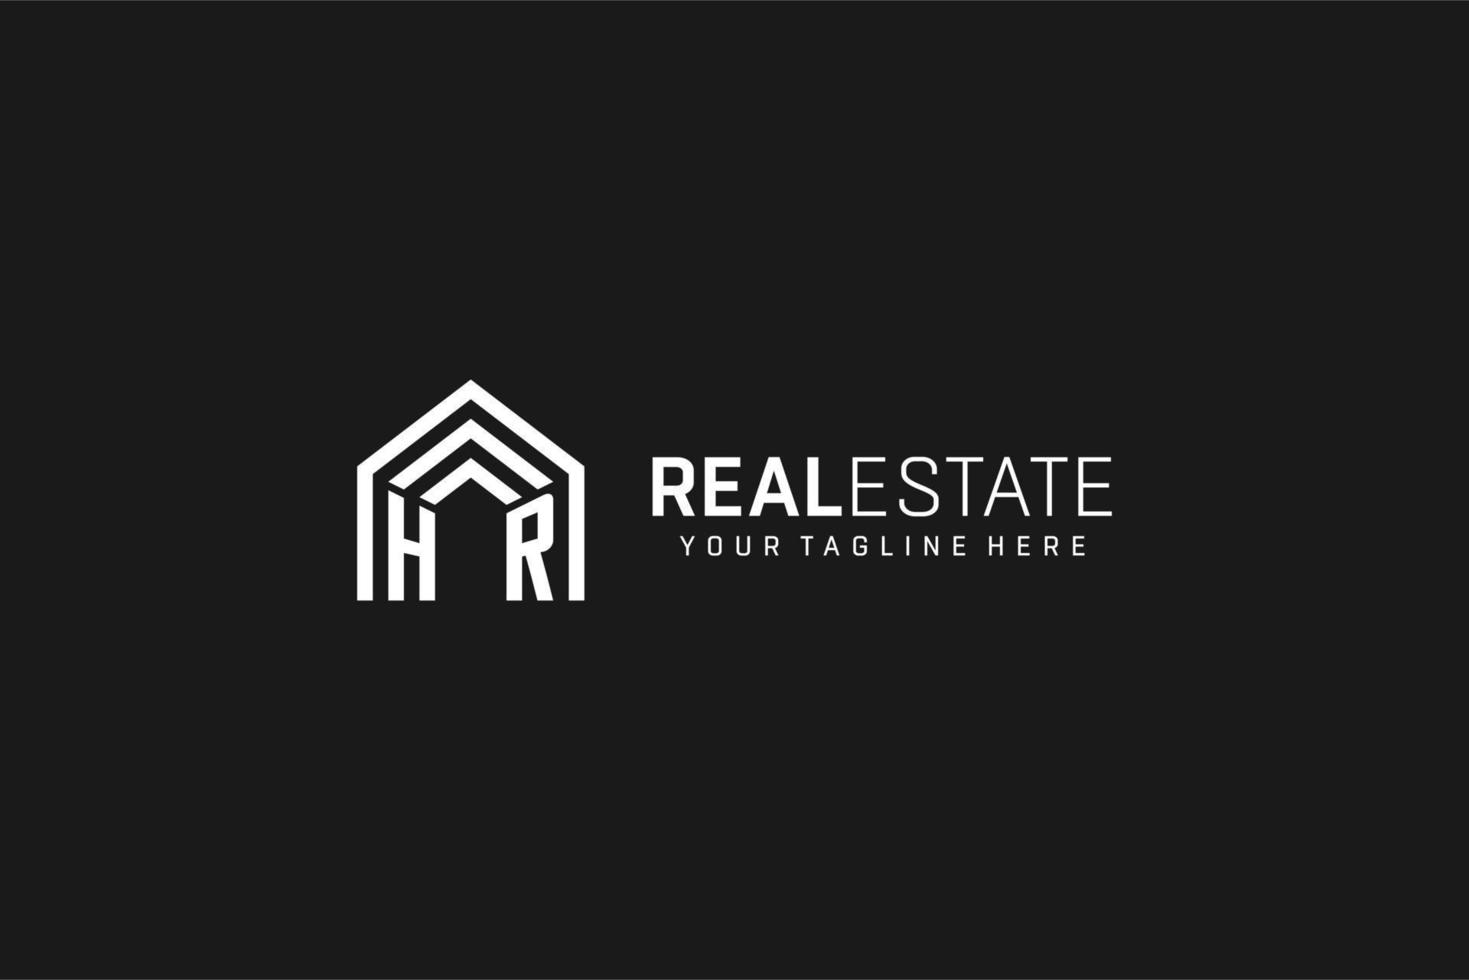 Letter HR house roof shape logo, creative real estate monogram logo style vector